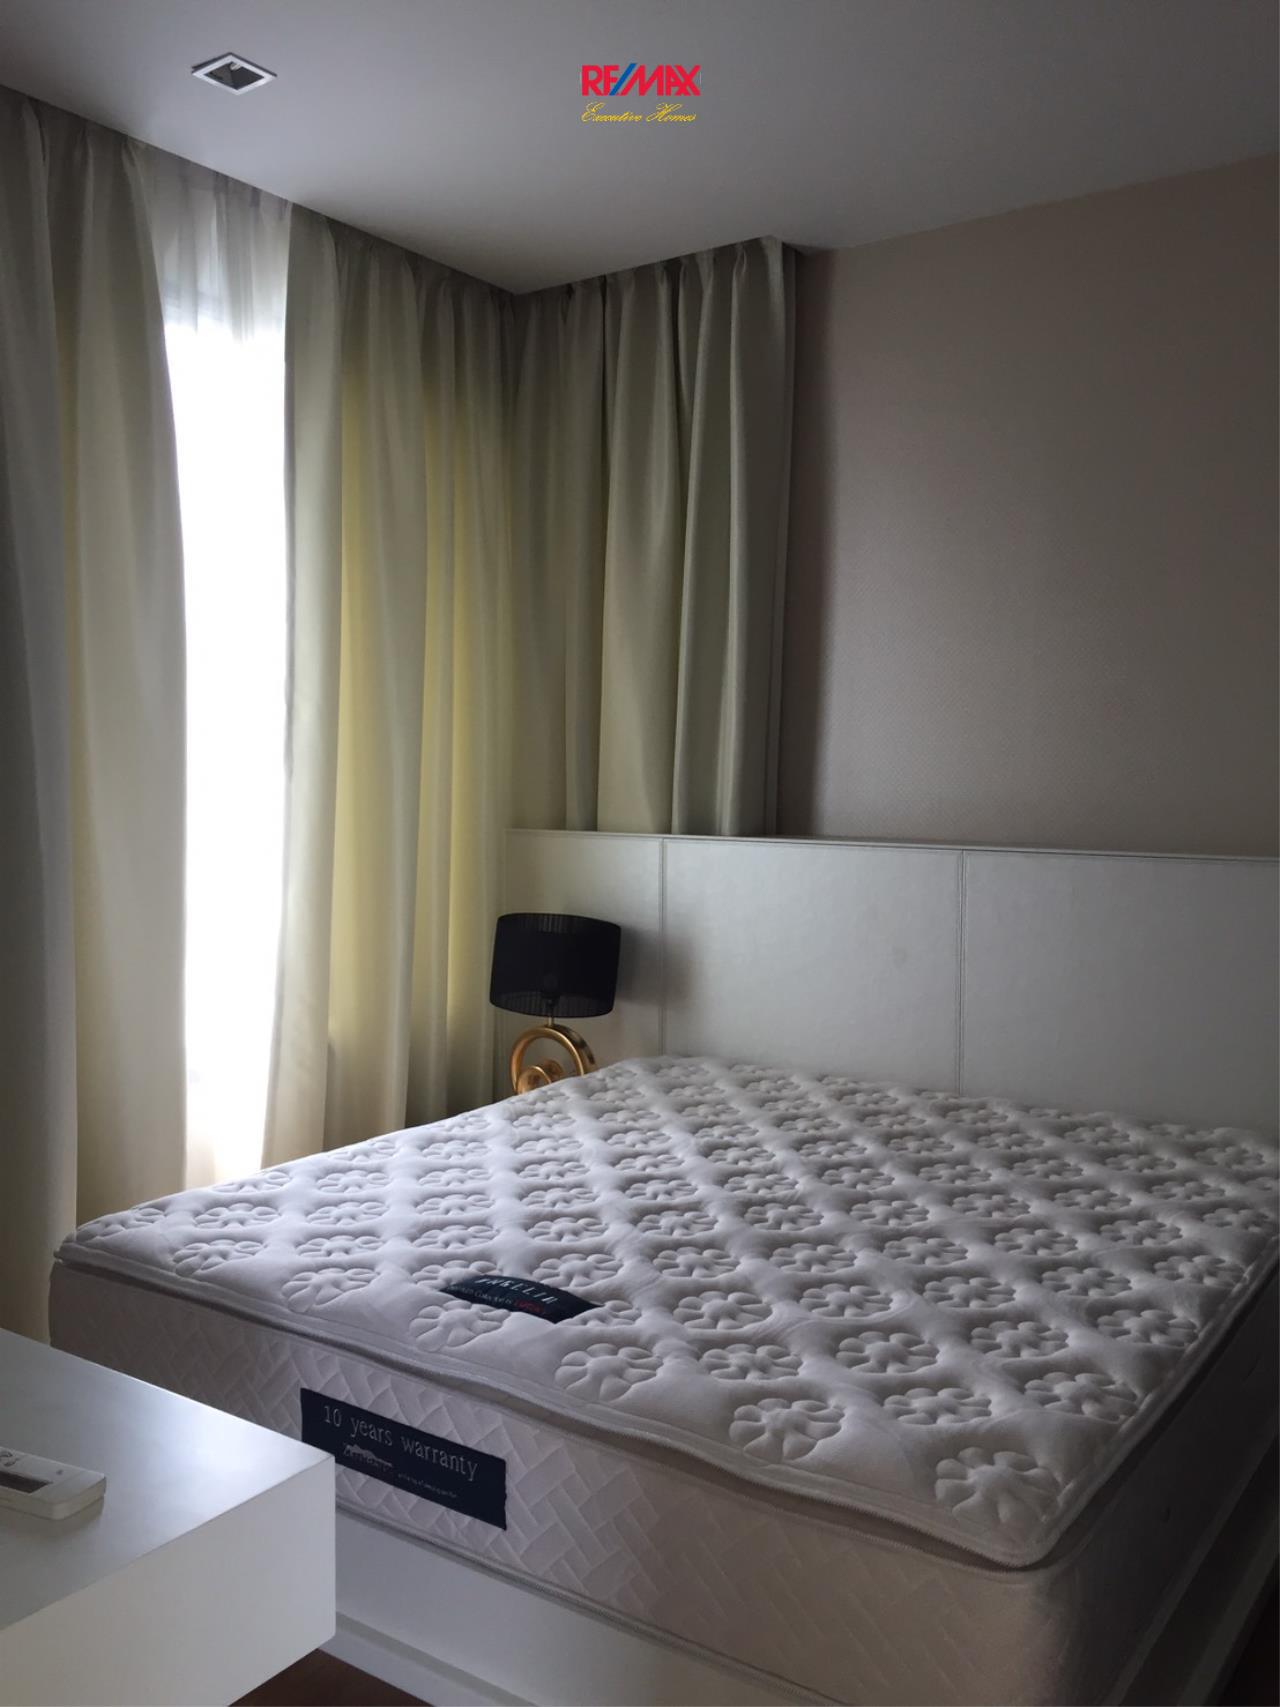 RE/MAX Executive Homes Agency's Nice 2 Bedroom for Sale Keyne by Sansiri 2